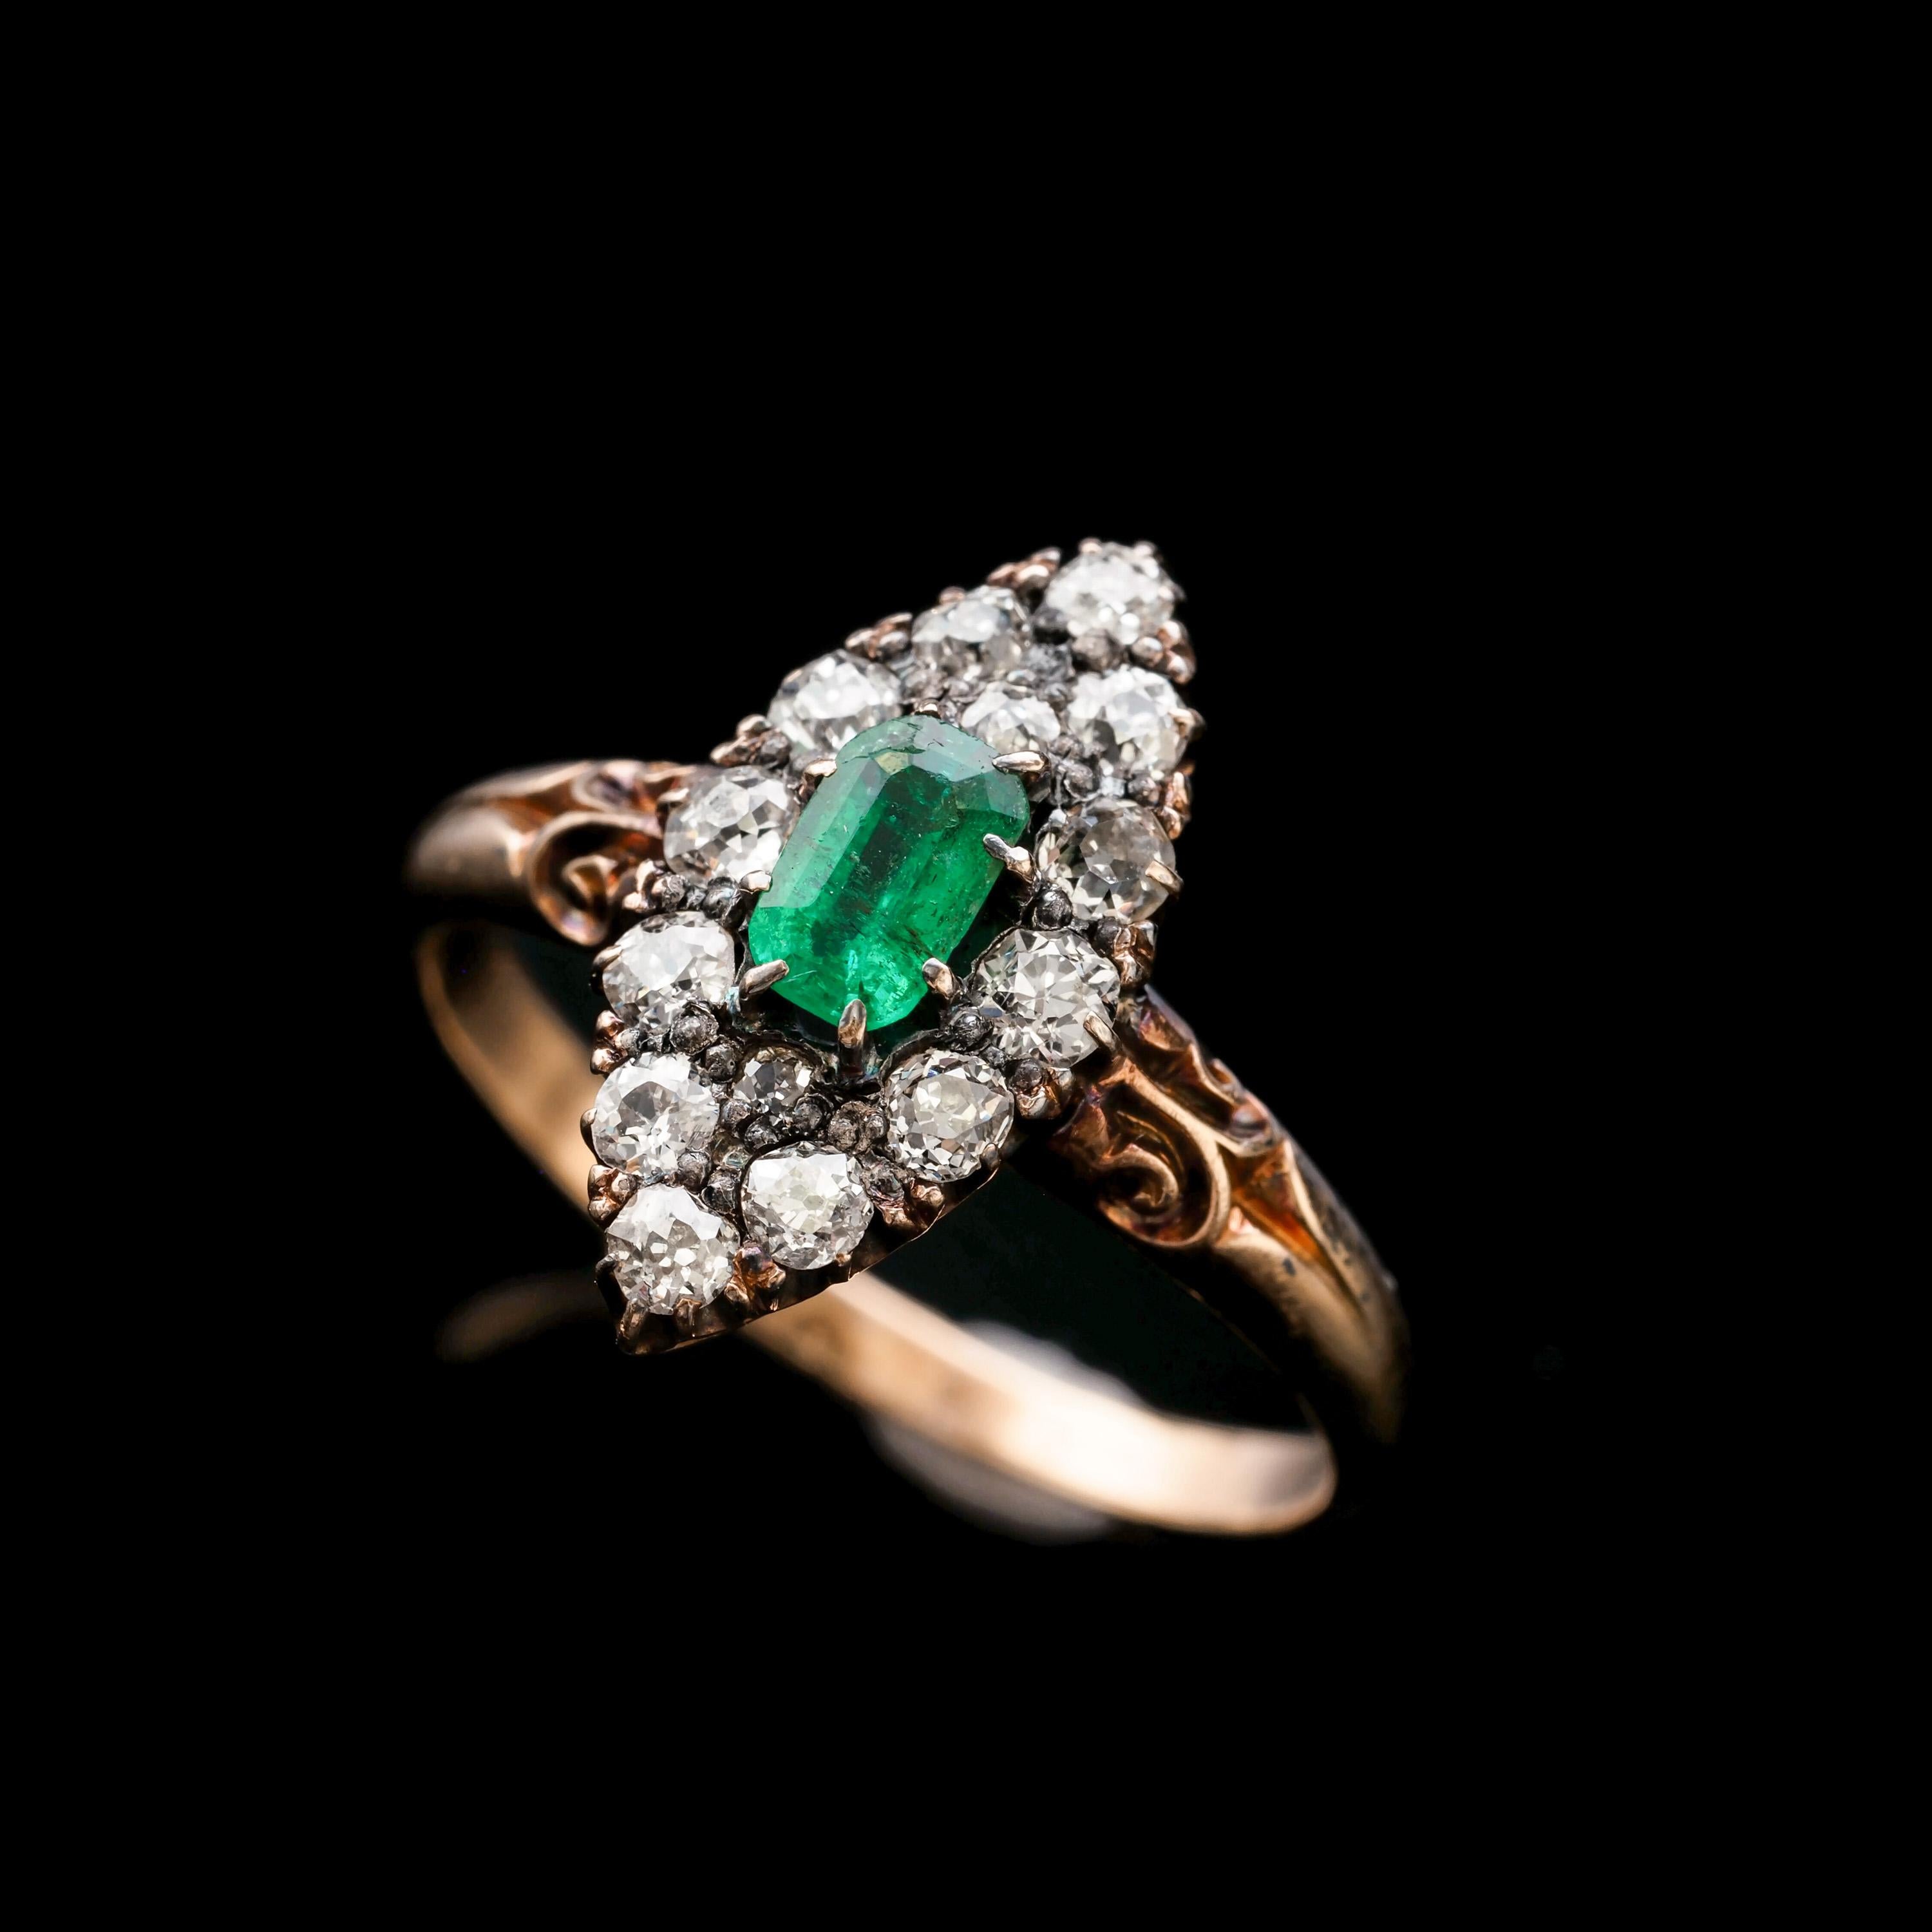 Antique Victorian 18K Gold Emerald & Diamond Navette Cluster Ring - c.1880 For Sale 3